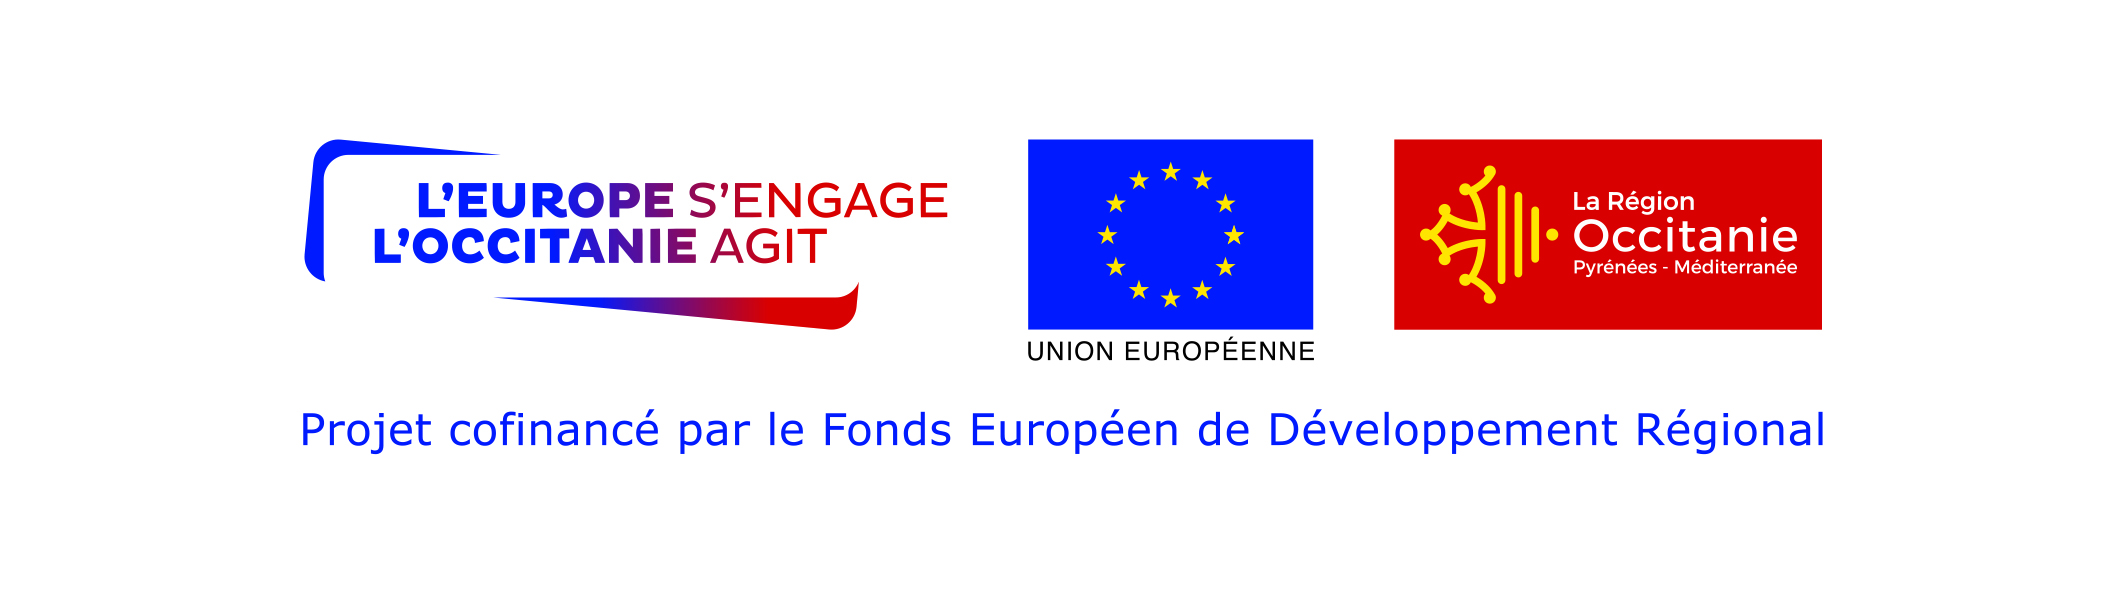 Bandeau europe-logo